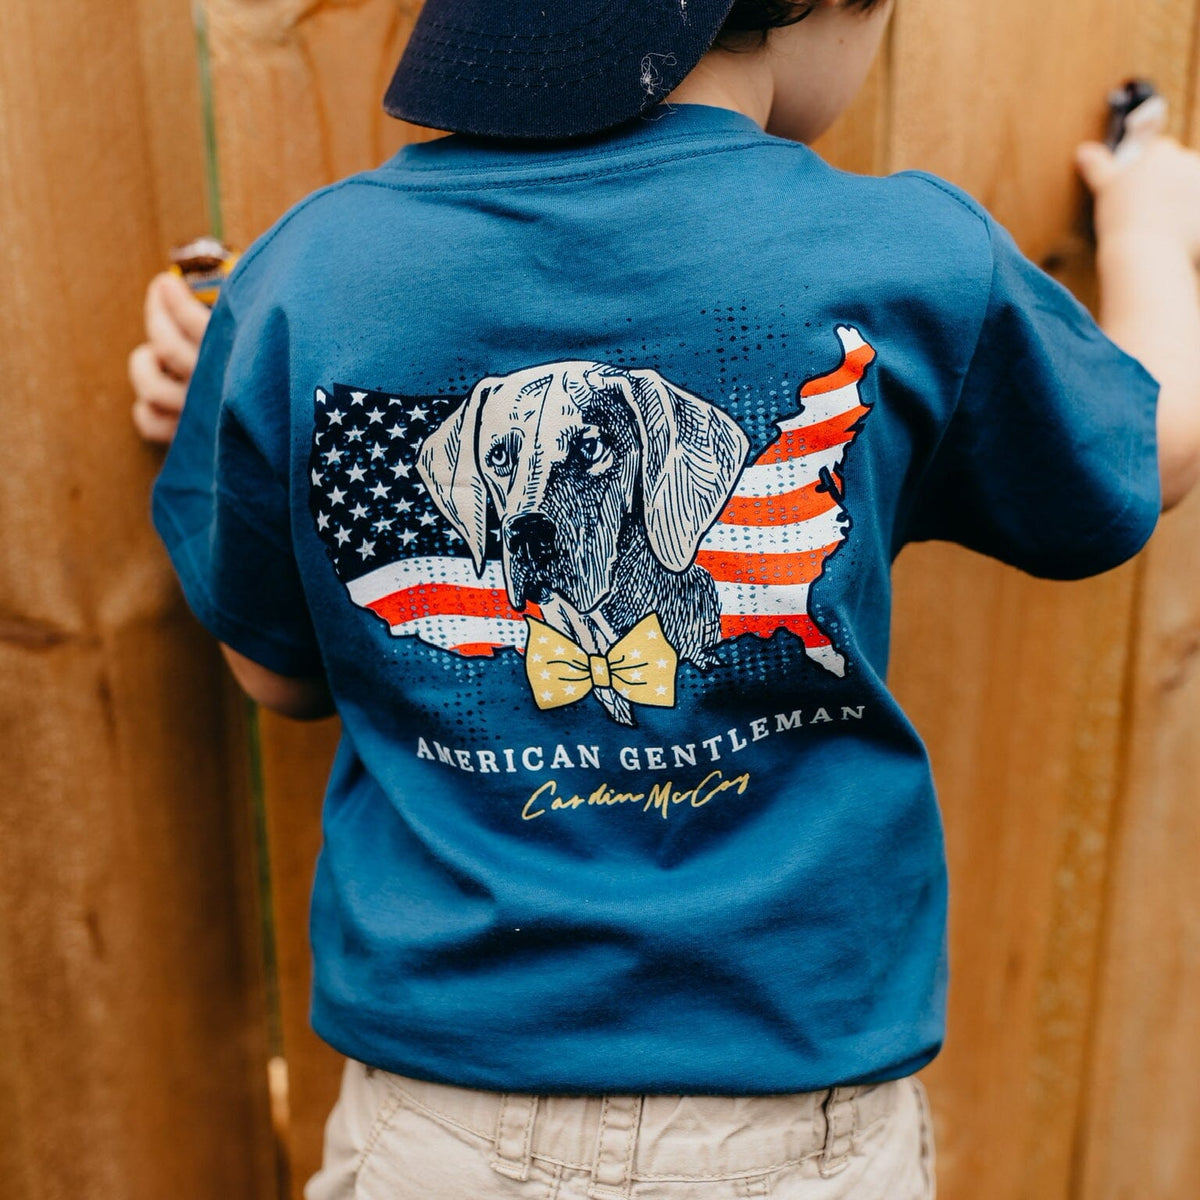 Boys' American Gentleman Dog Short-Sleeve Tee Short Sleeve T-Shirt Cardin McCoy 